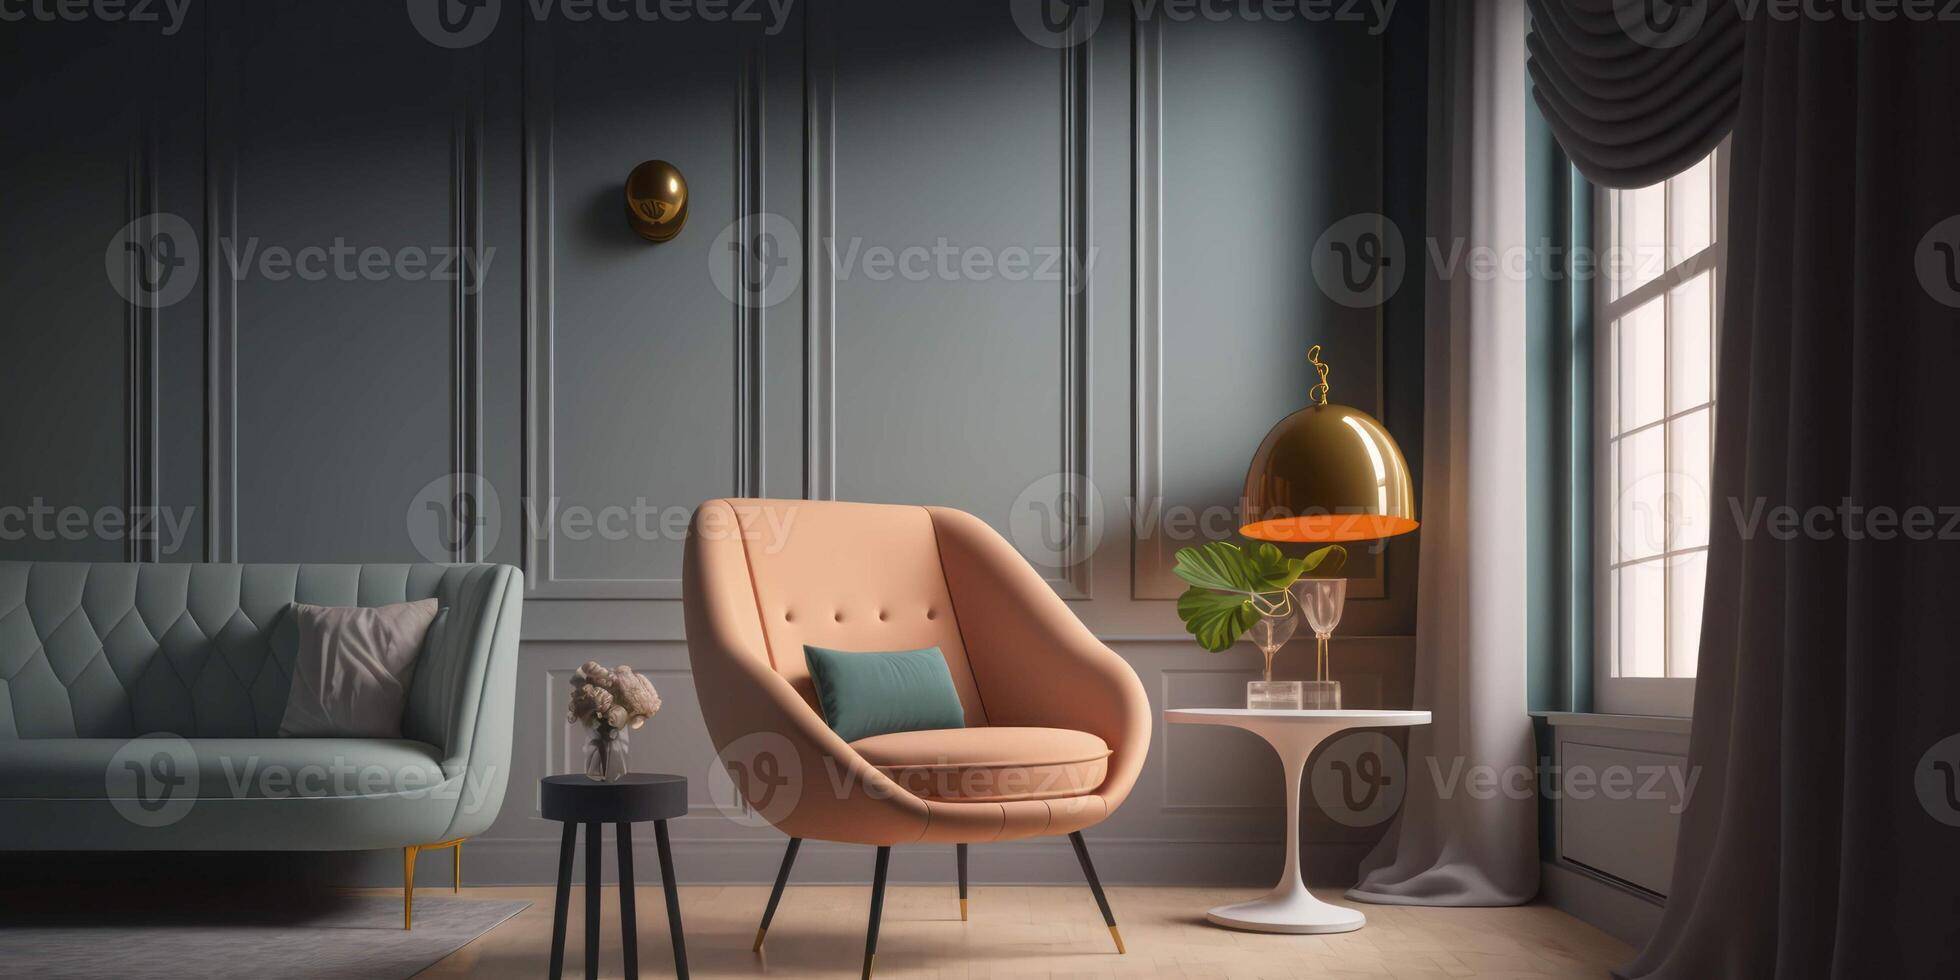 Minimalist Room with Single Chair interior Photography photo